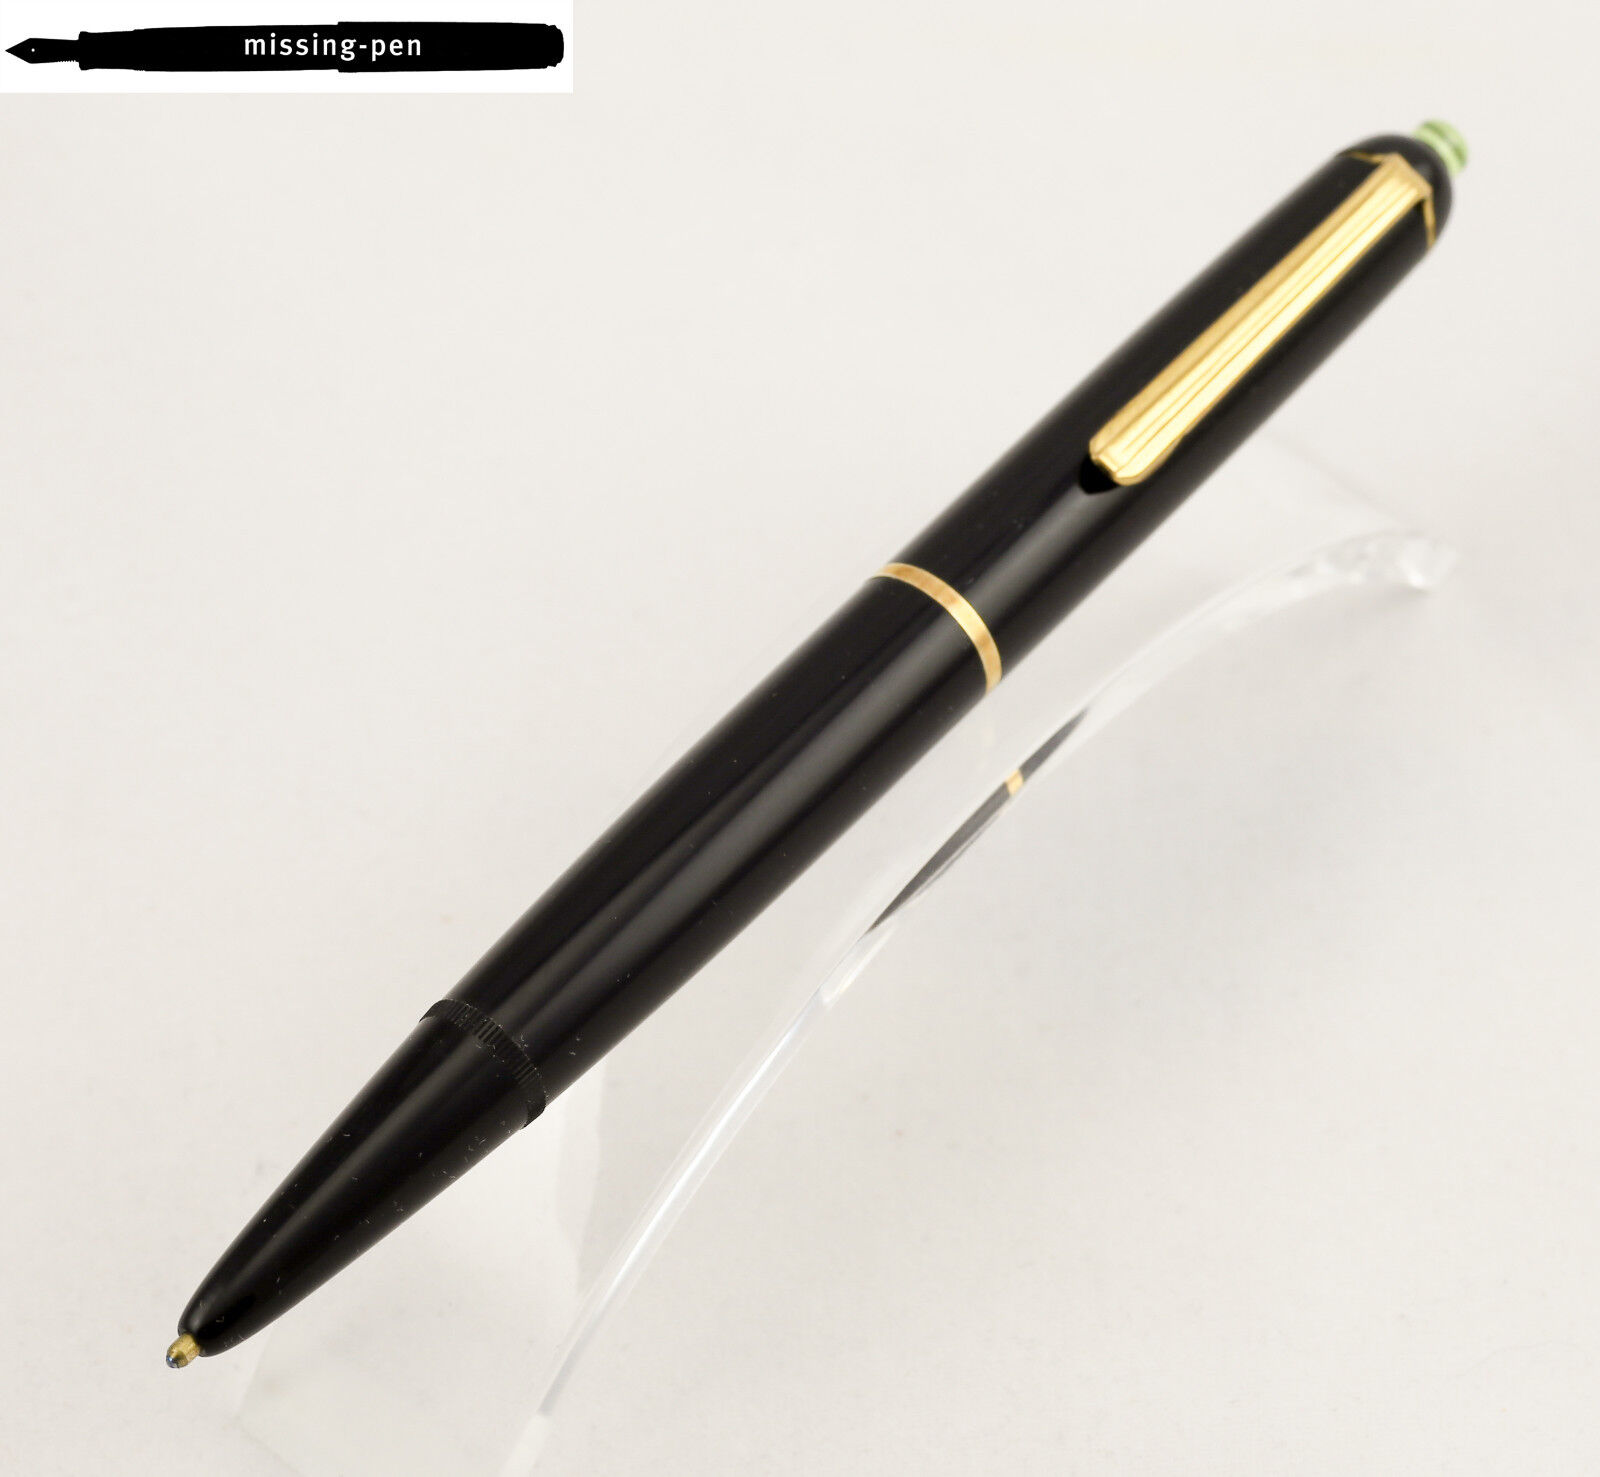 Vintage Artus Ballpoint Pen 130 a D.B. Patent in Black-Gold 